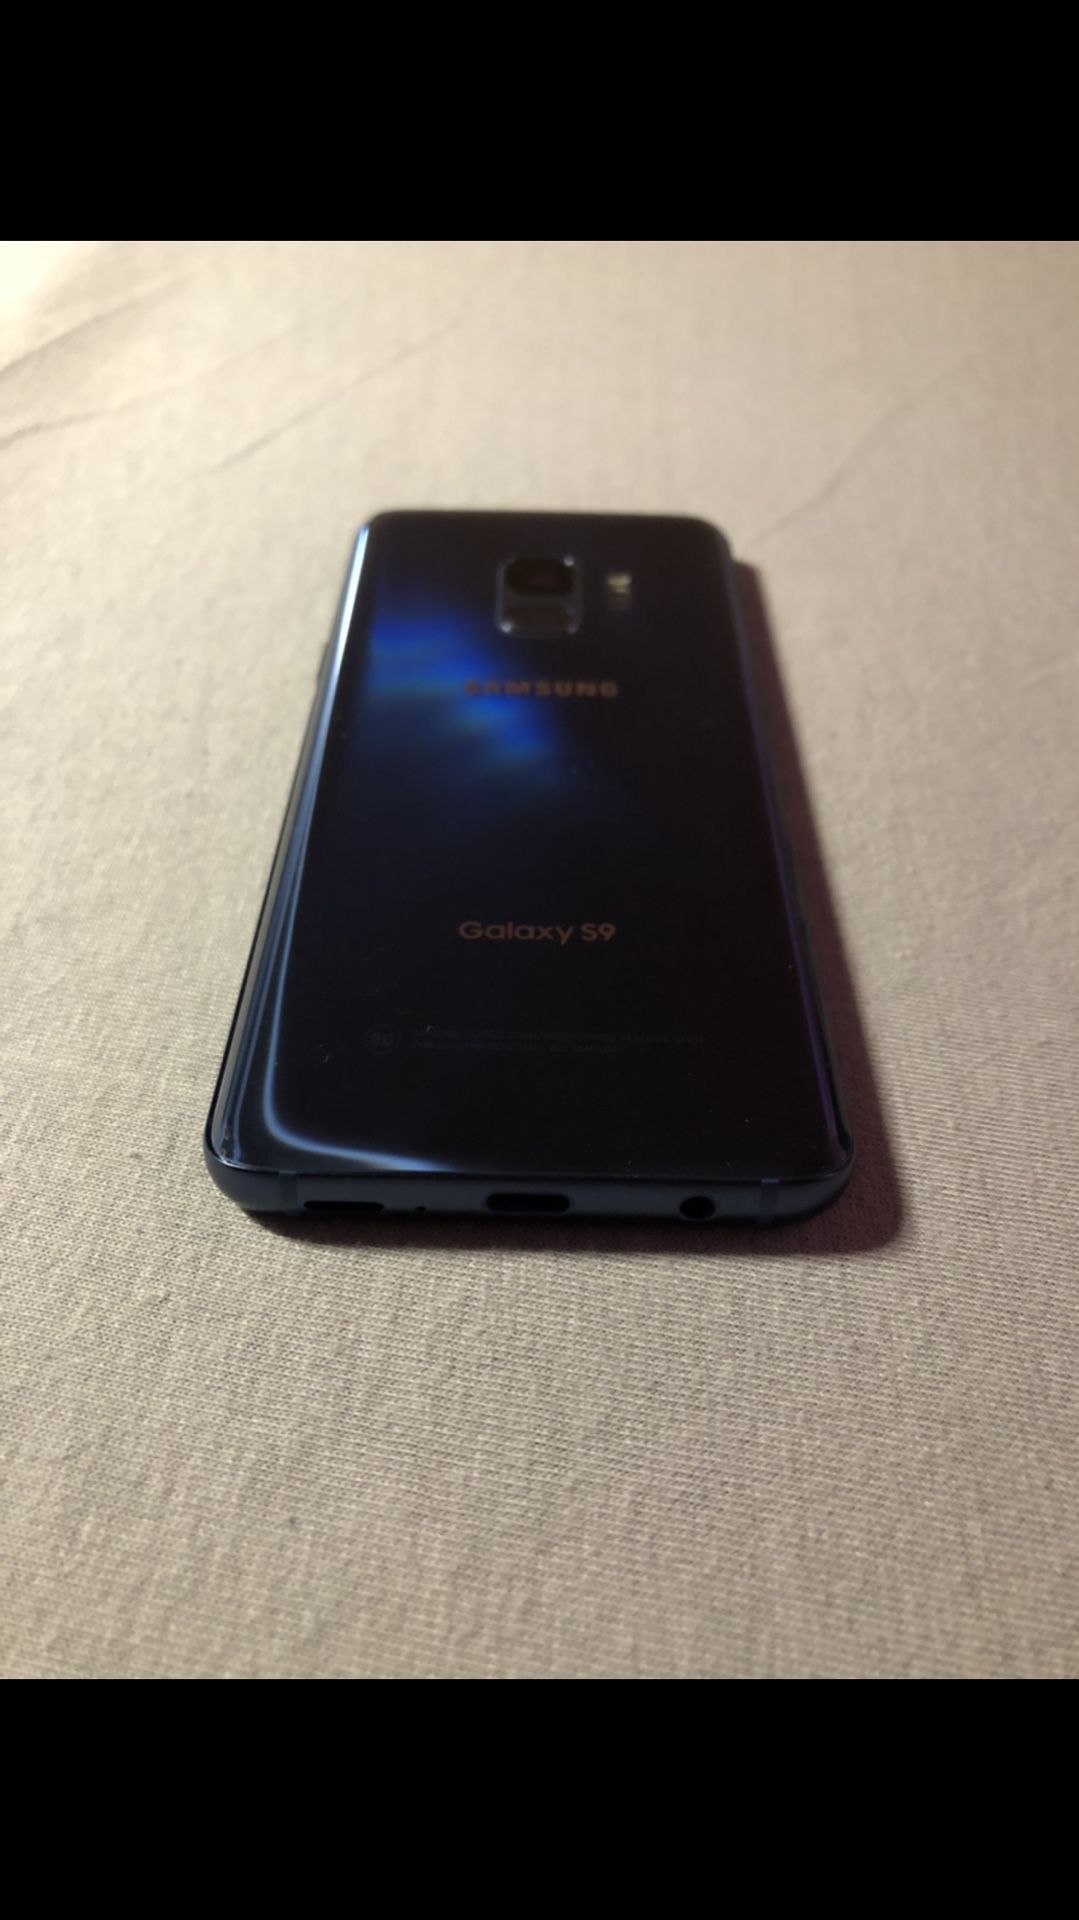 Carrier unlocked Samsung Galaxy s9 64GB